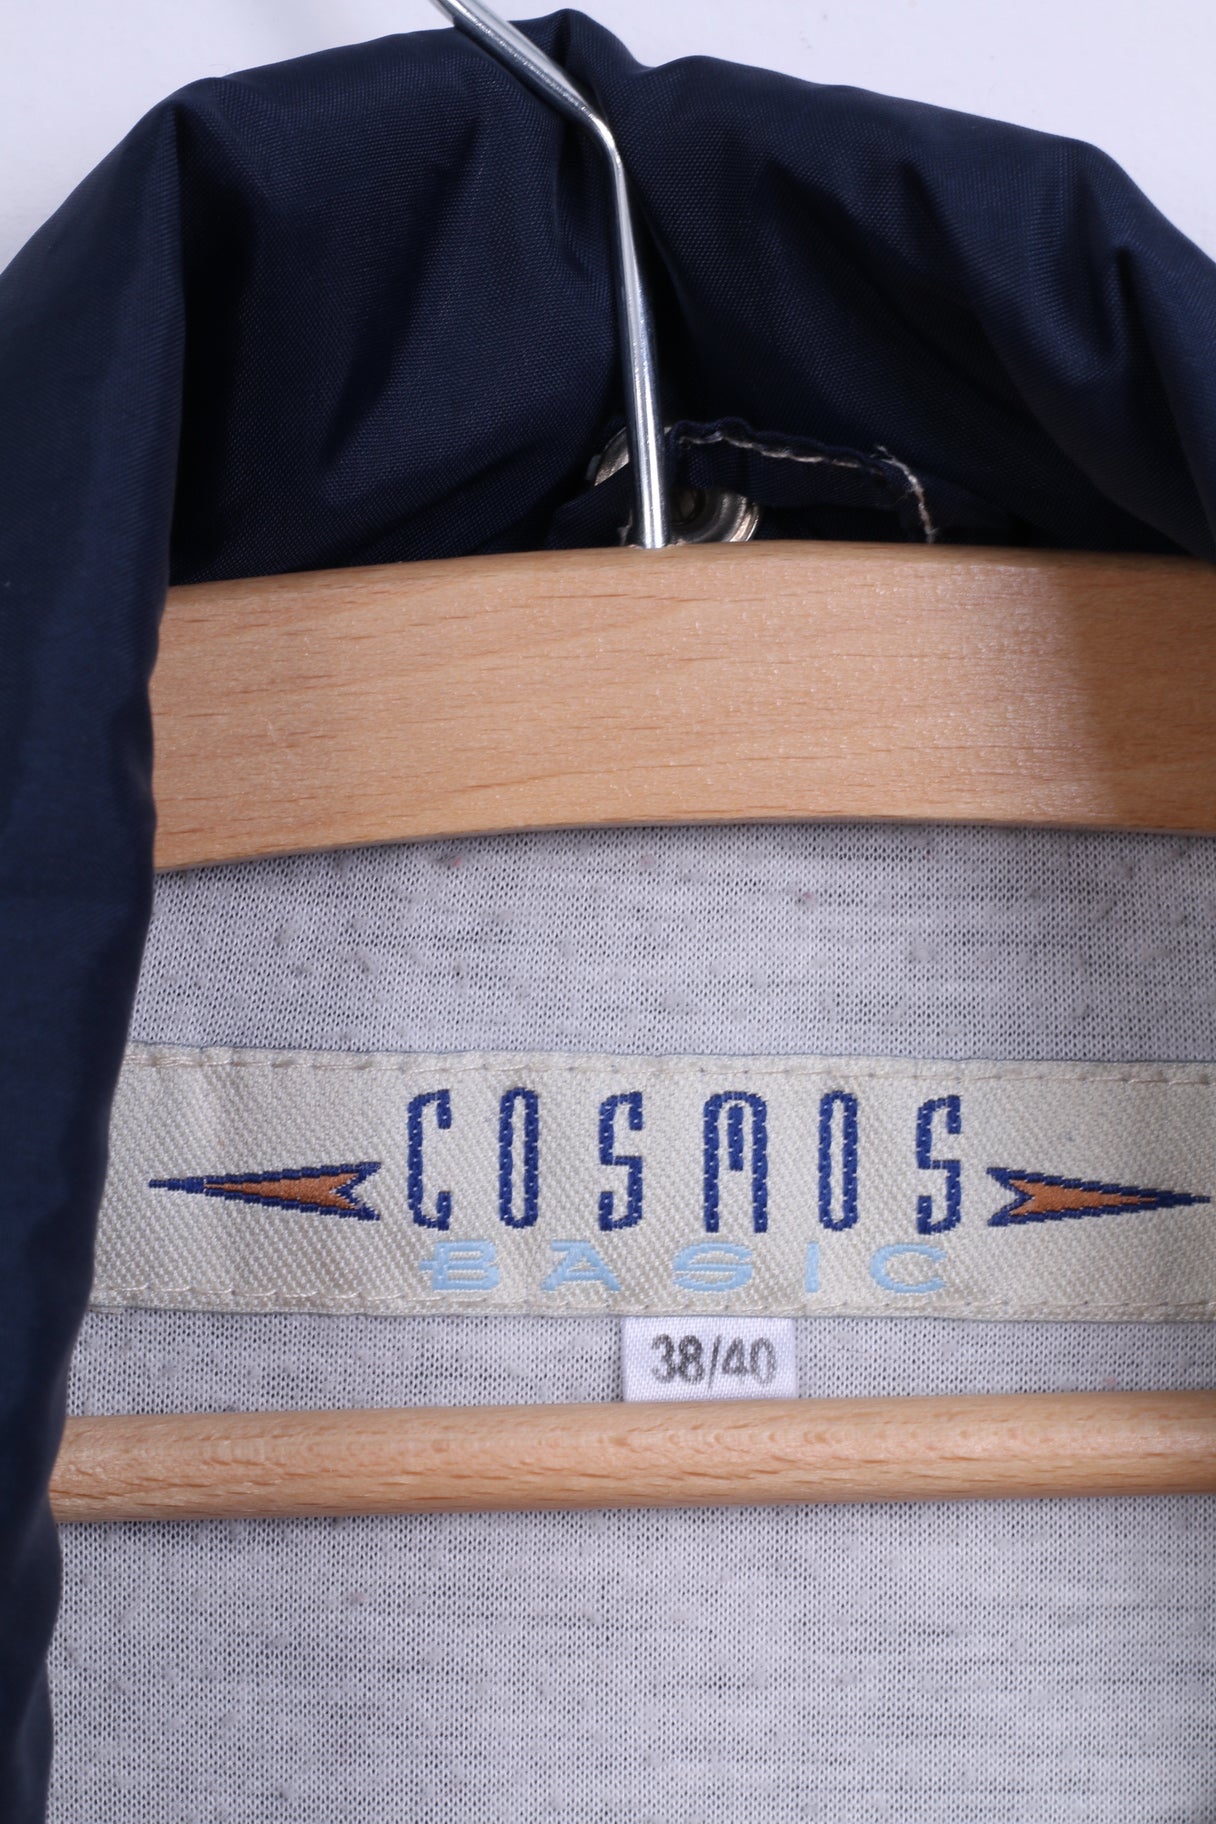 COSMOS Basic Mens 38/40 M Jacket Navy Hidden Hood Nylon Waterproof Top